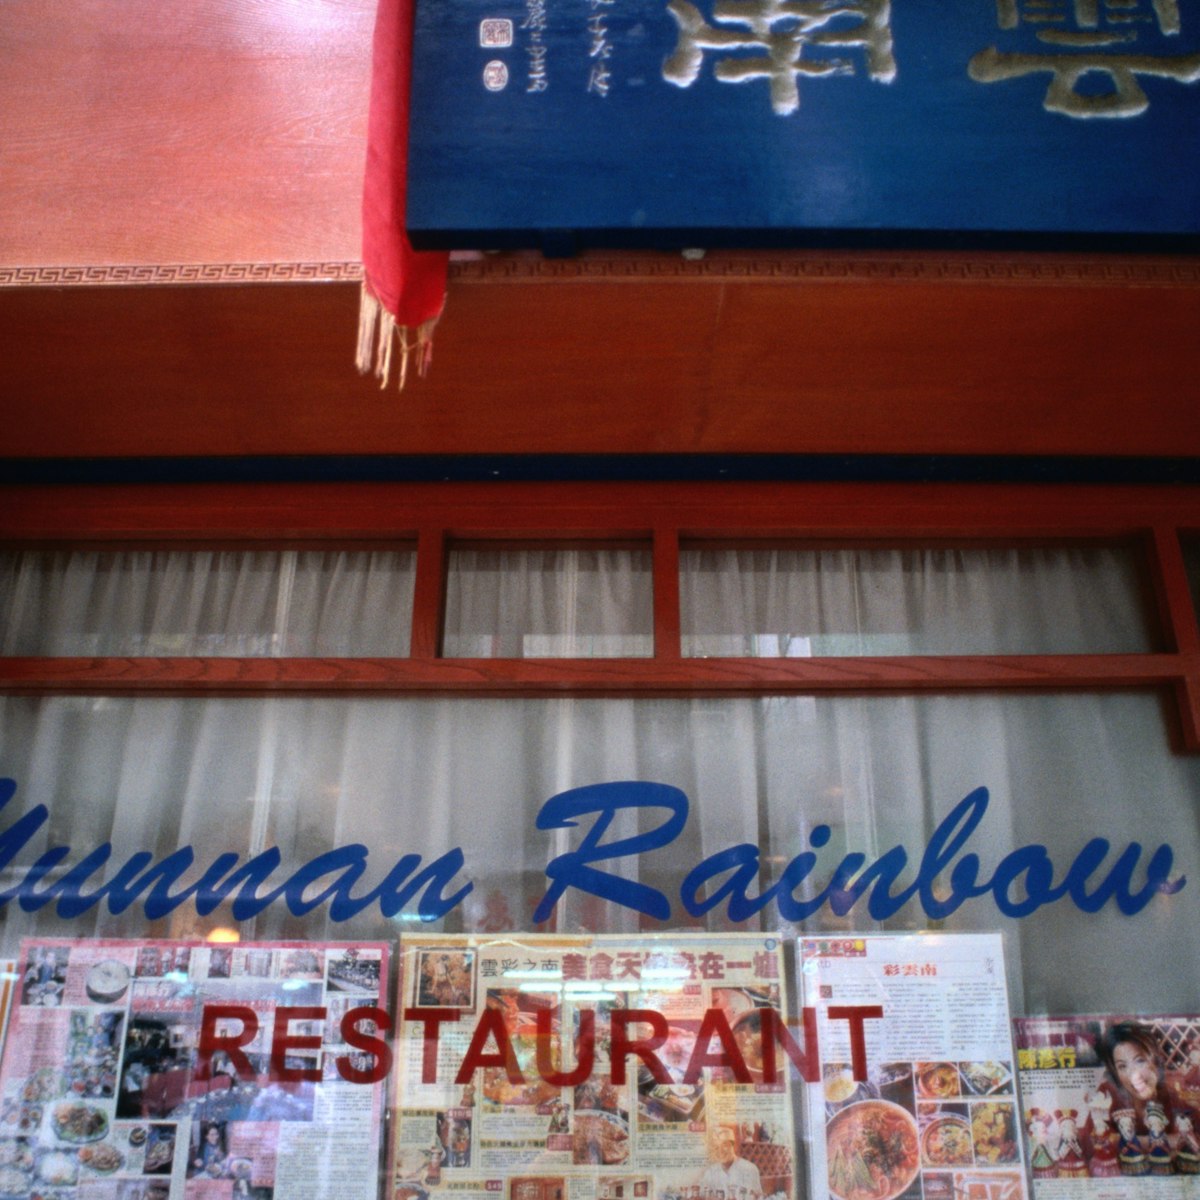 The Yunnan Rainbow Restaurant at 18 Shelter Street in Causeway Bay.